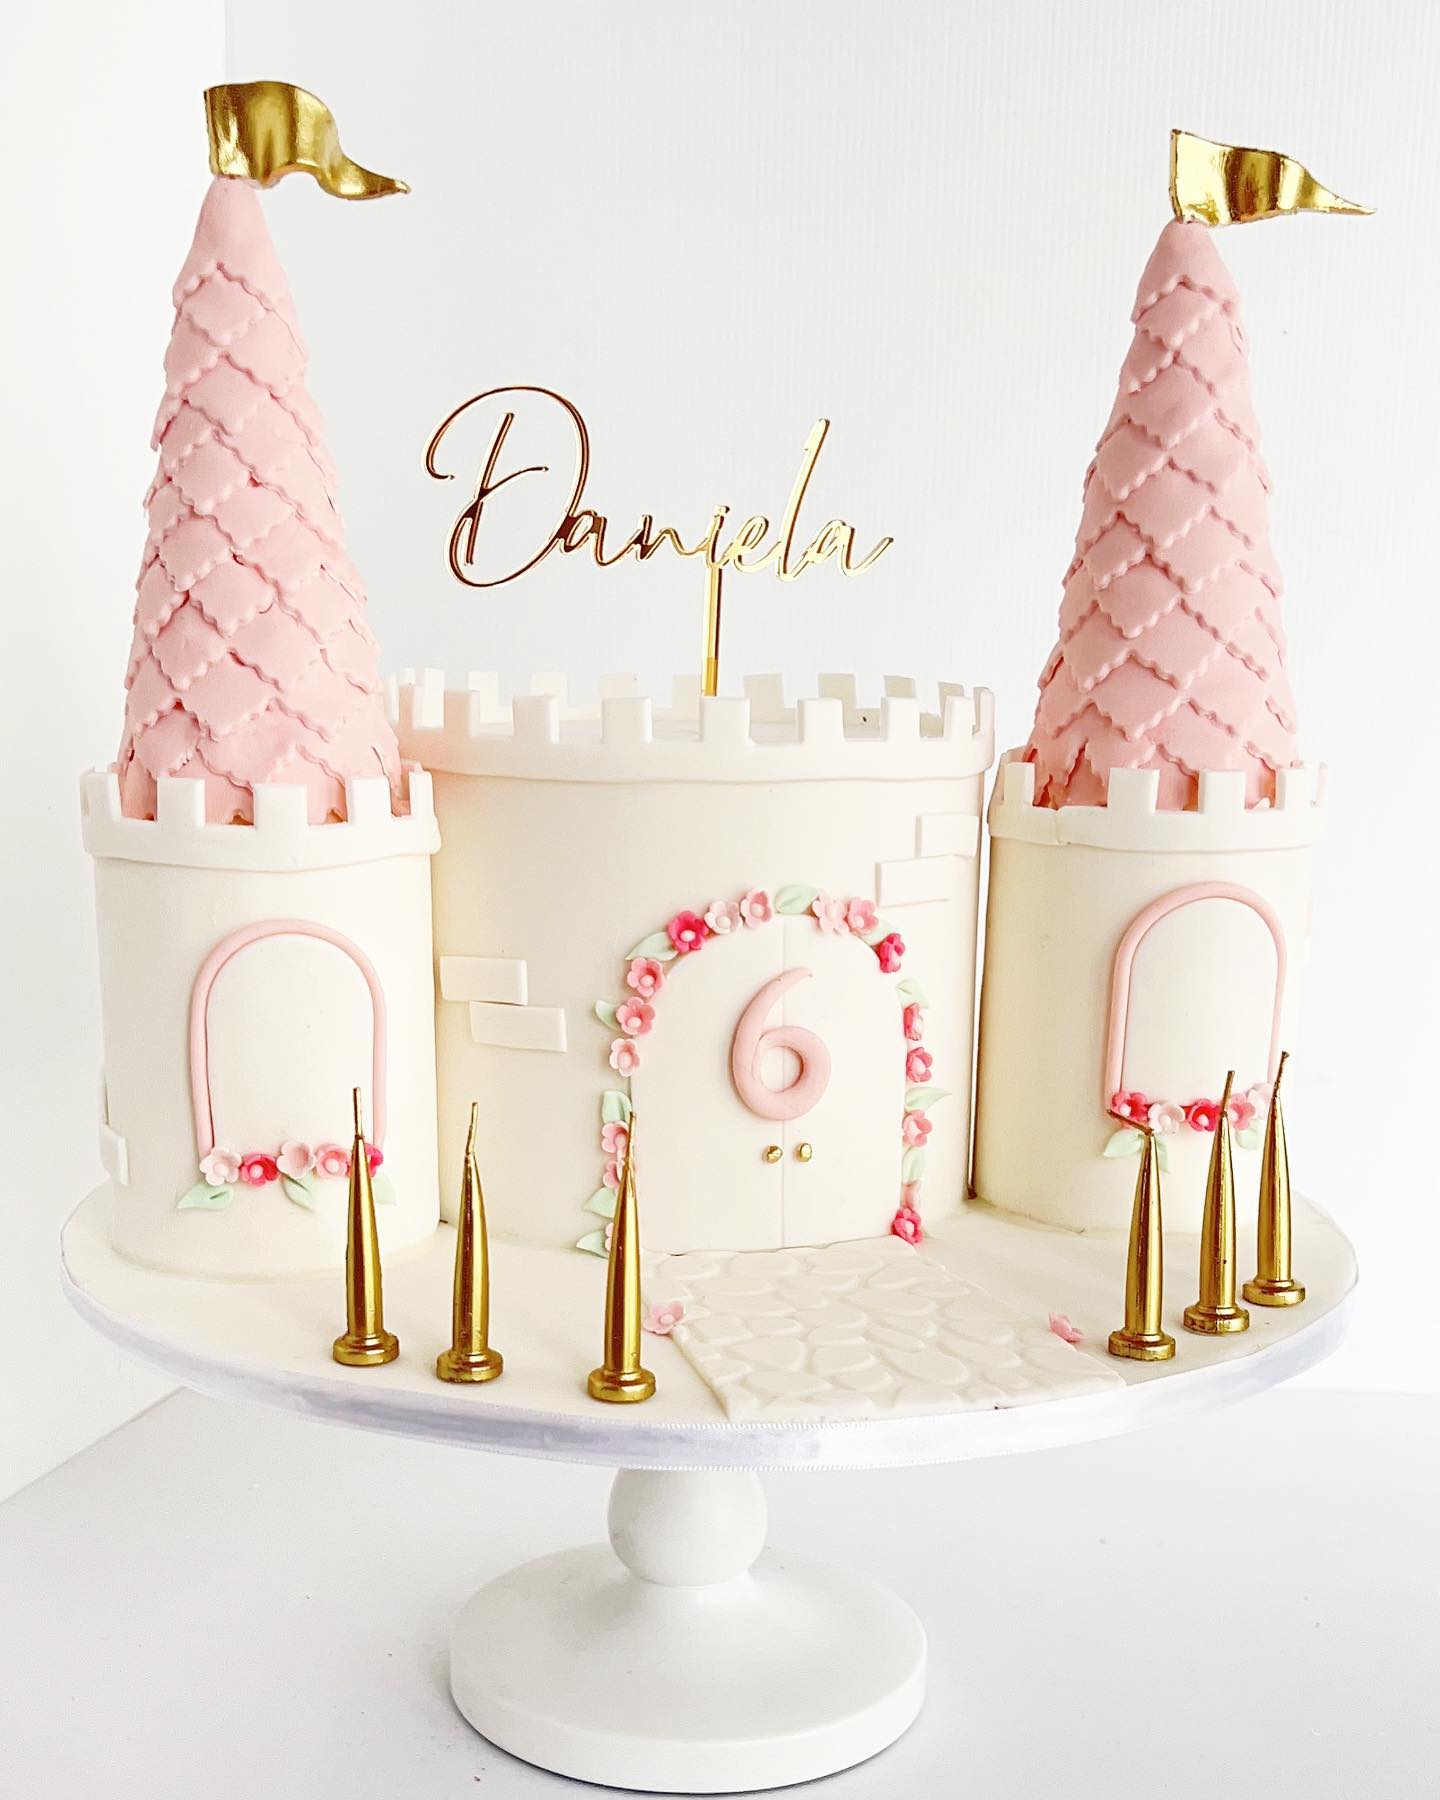 Disney castle cake! : r/cakedecorating